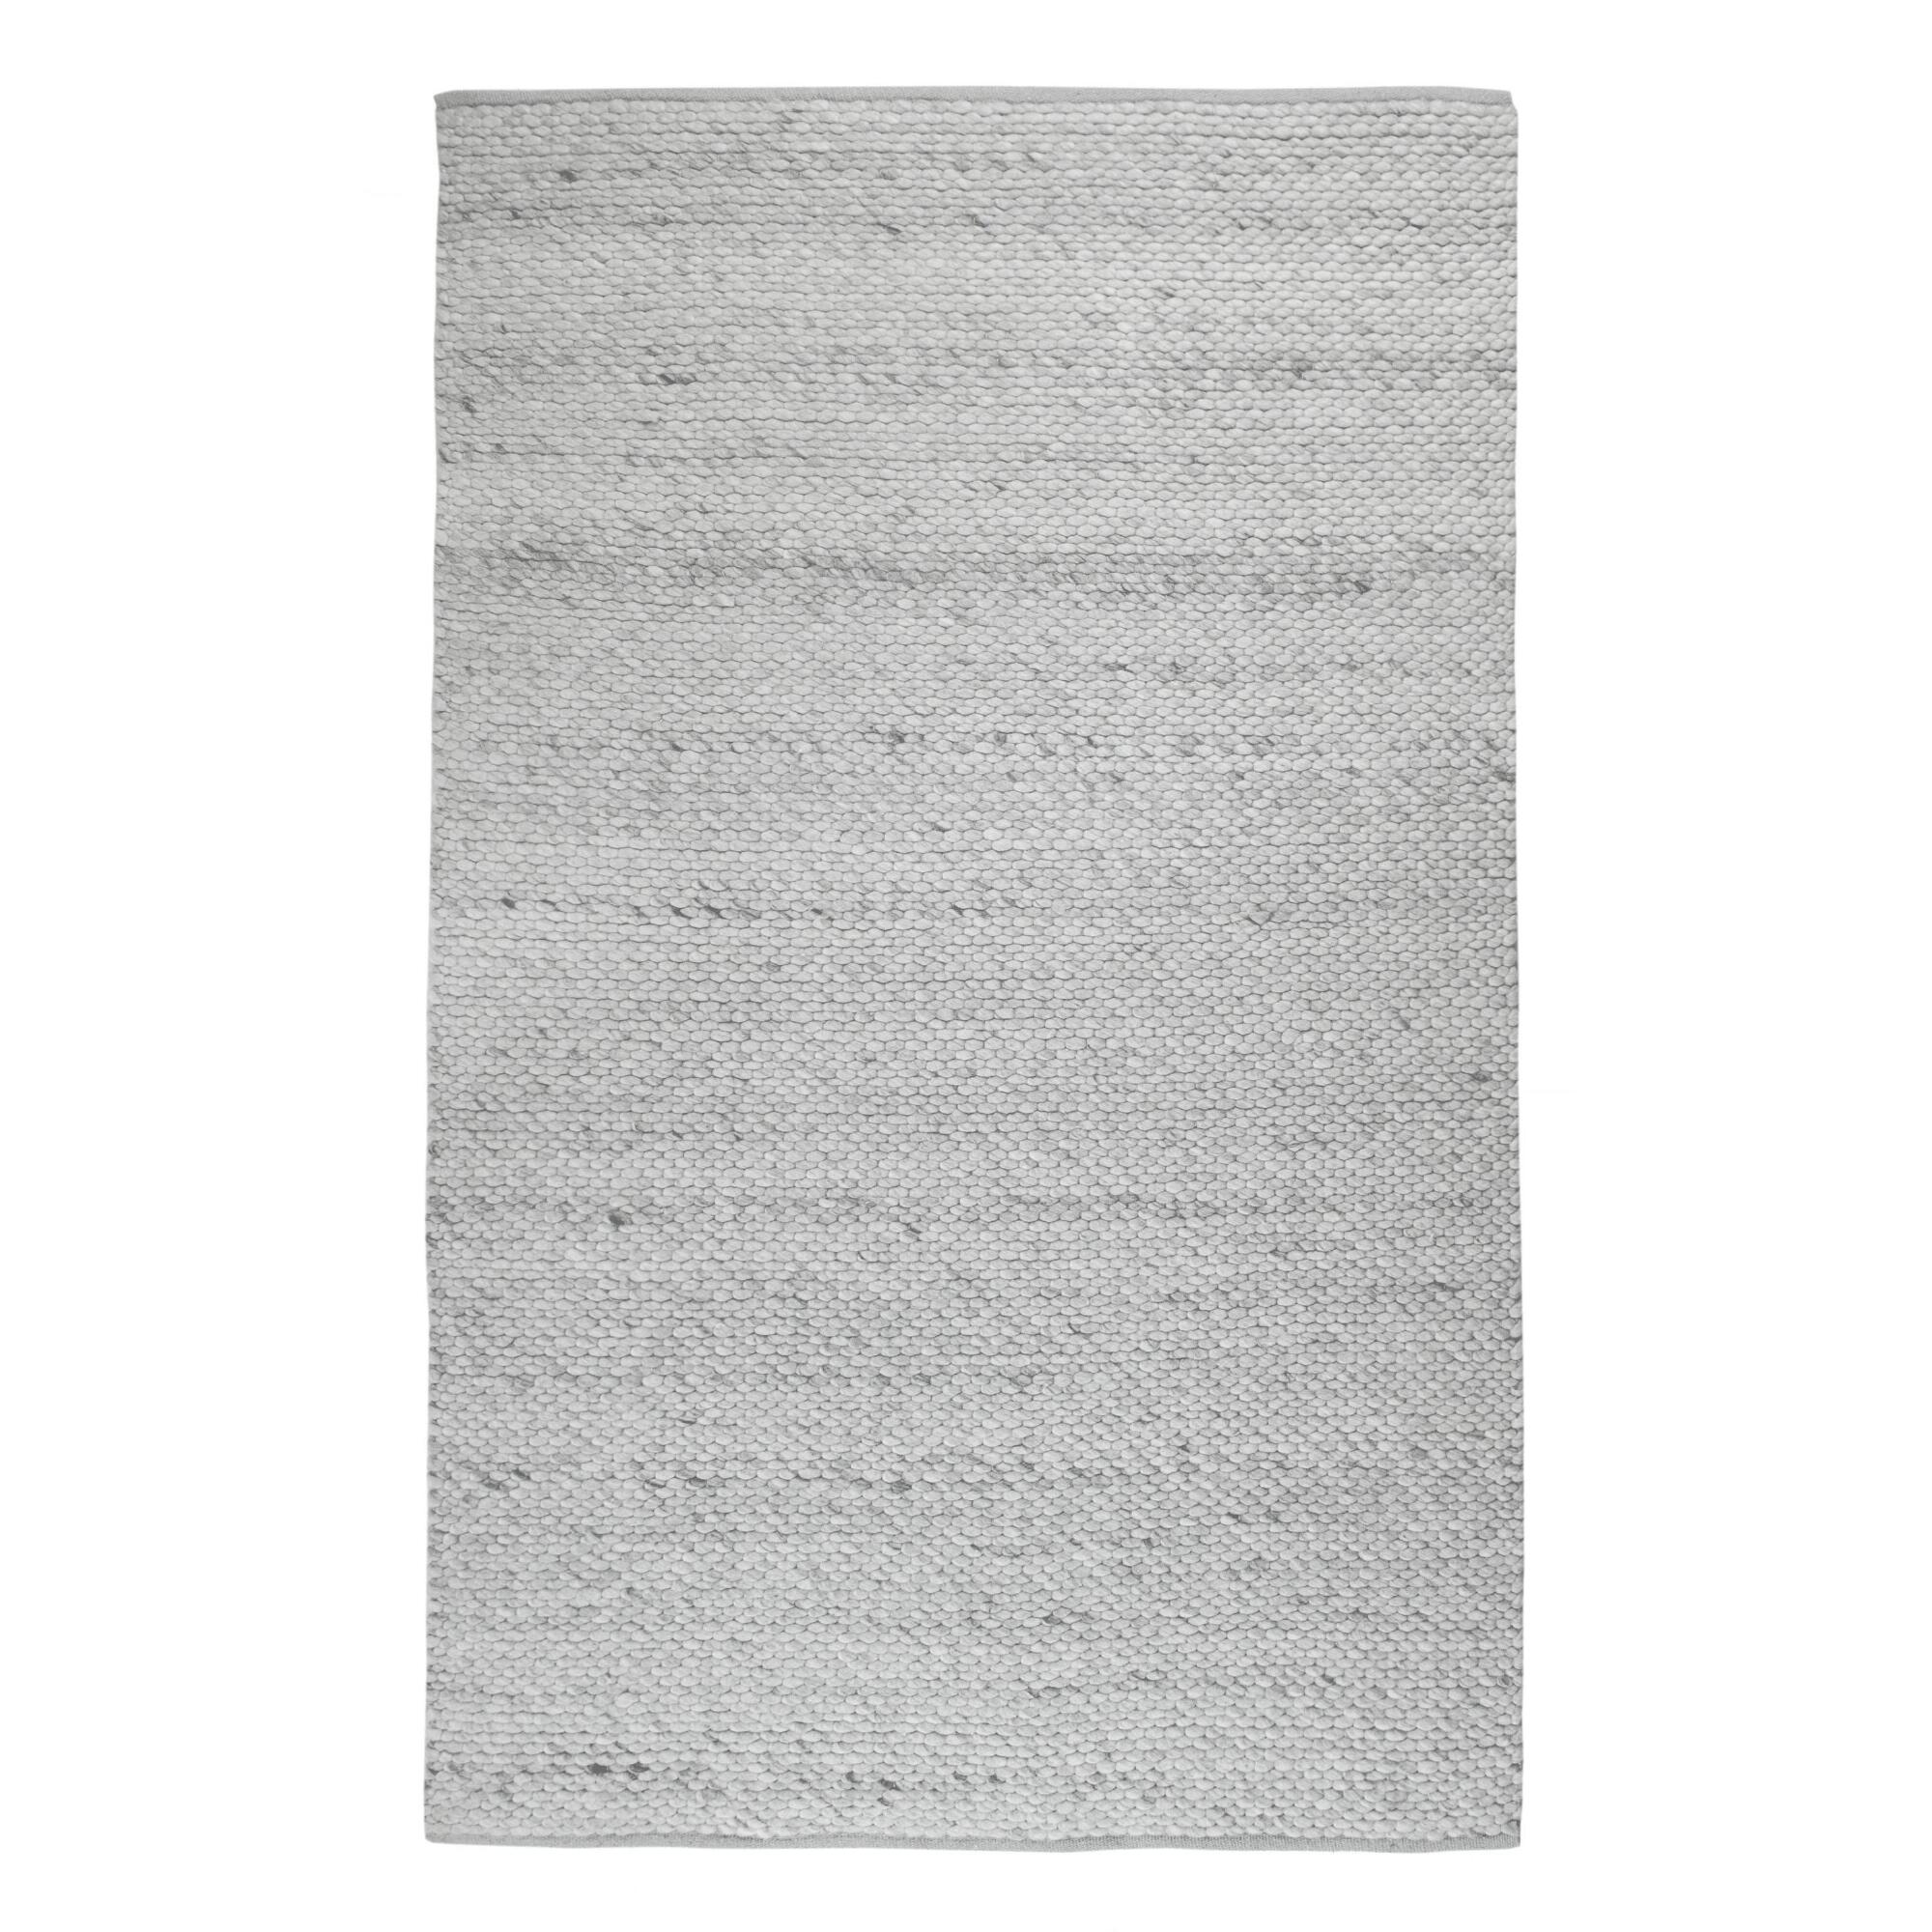 Gray Sweater Wool Blend Lucas Area Rug - 5' x 8' by World Market